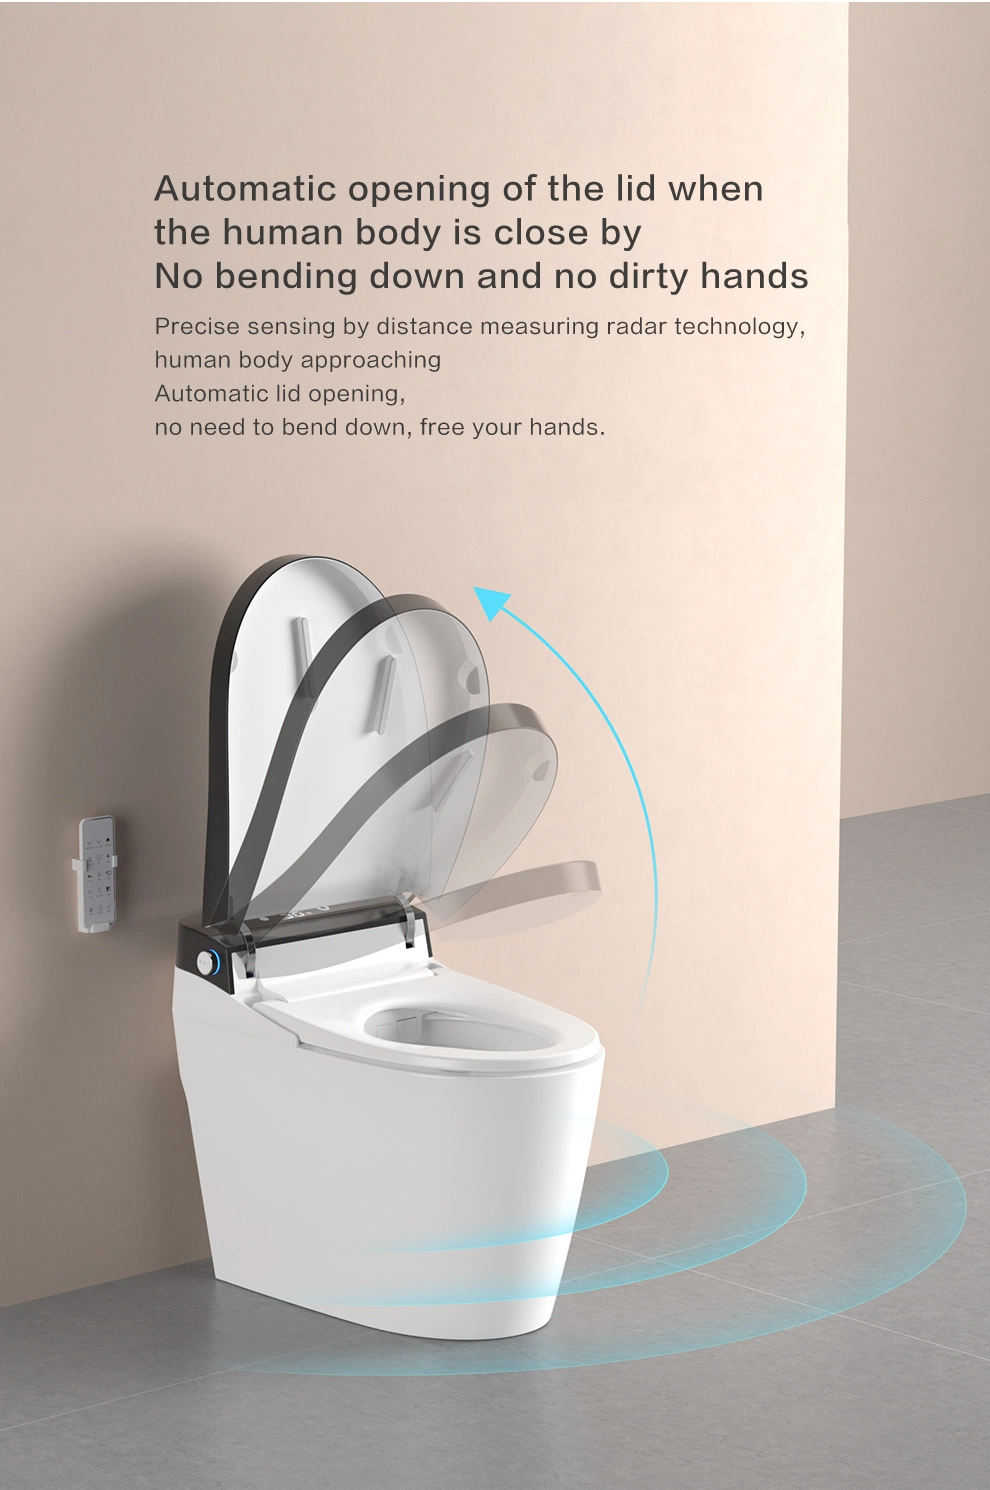 Bto European Luxury Bathroom Intelligent Toilet with Remote Control Toilet